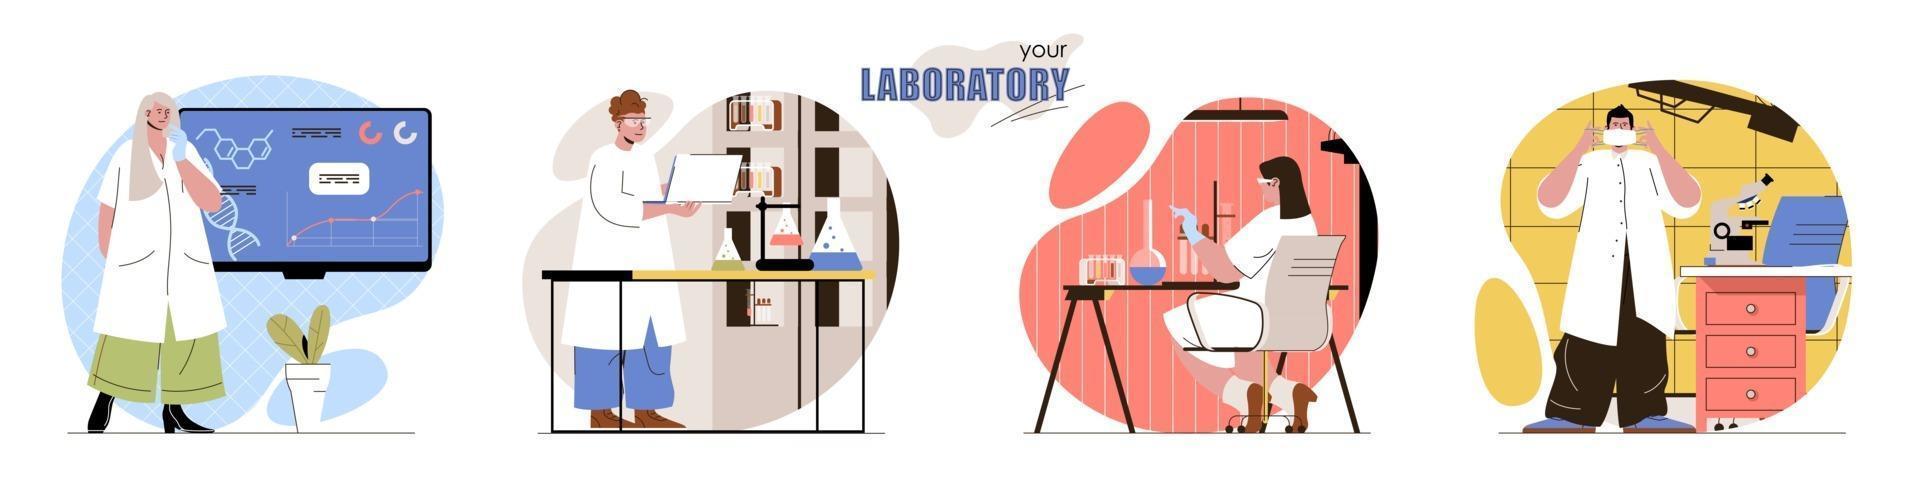 Your Laboratory concept scenes set vector